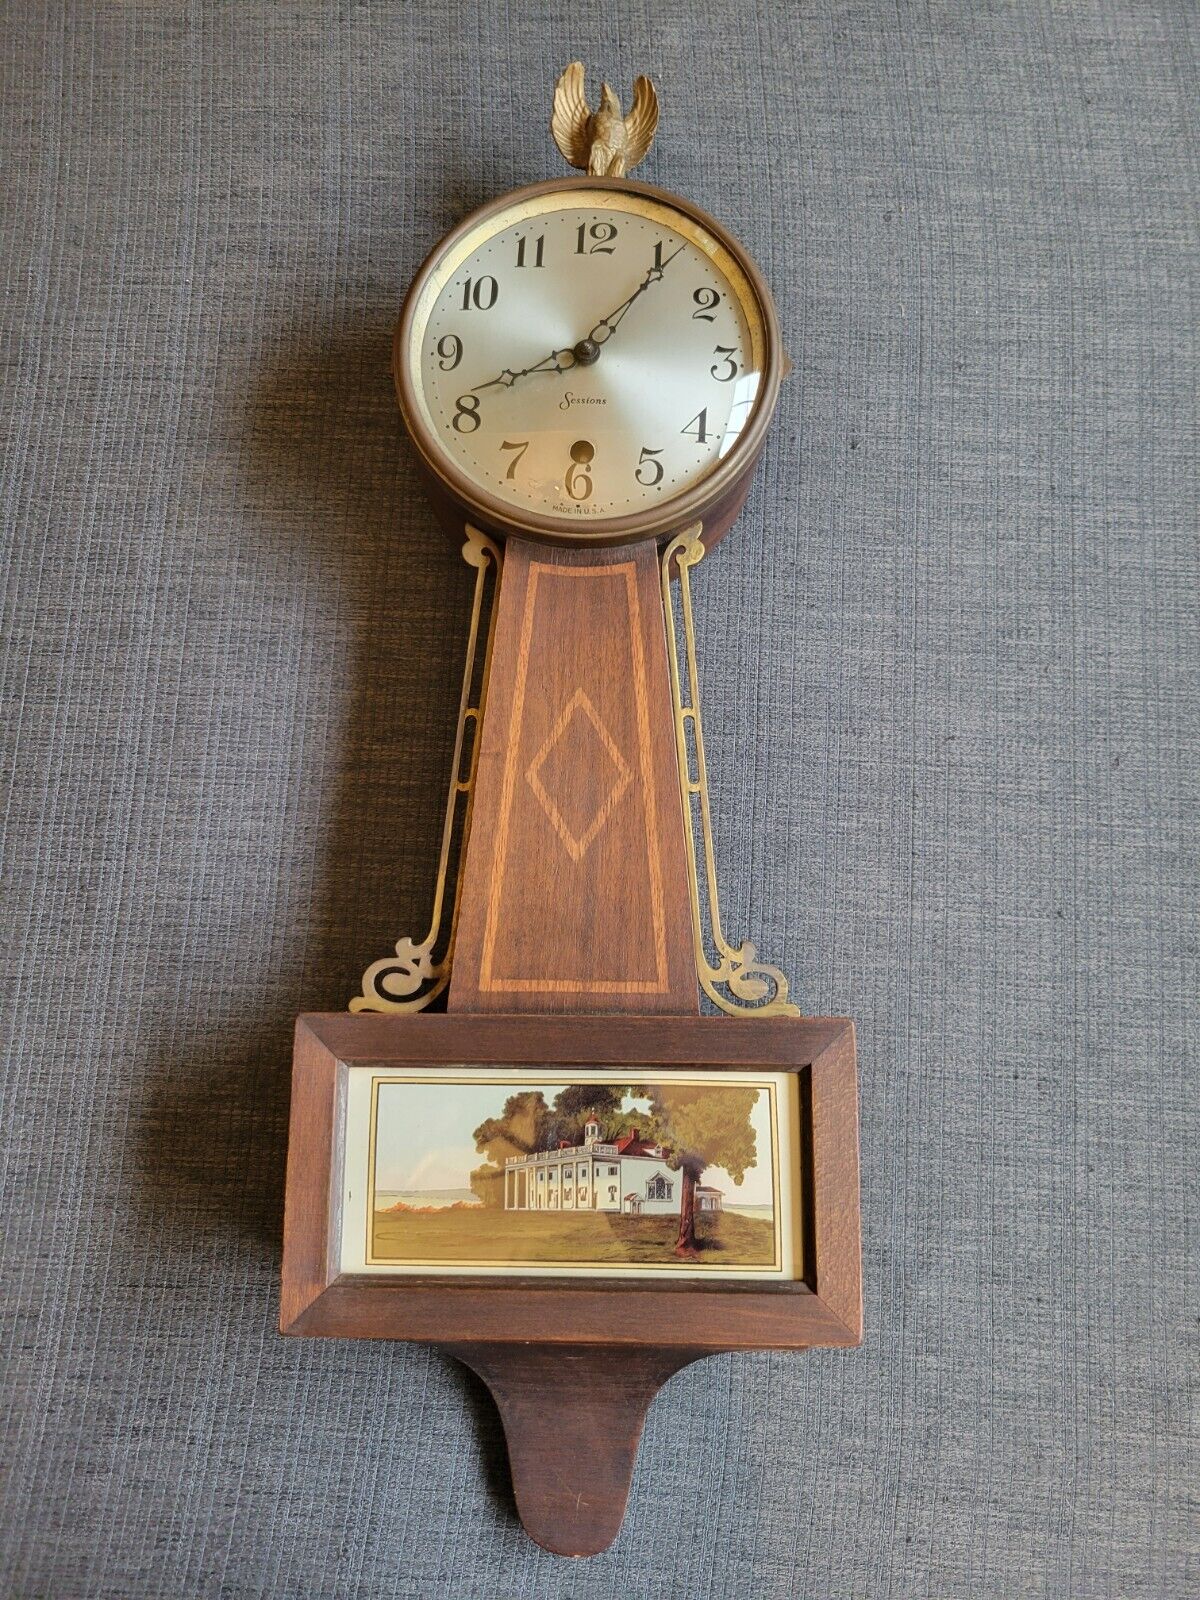 Vintage Sessions Regulator Banjo Clock 1920s-30s Tested Runs Well Good Cond.